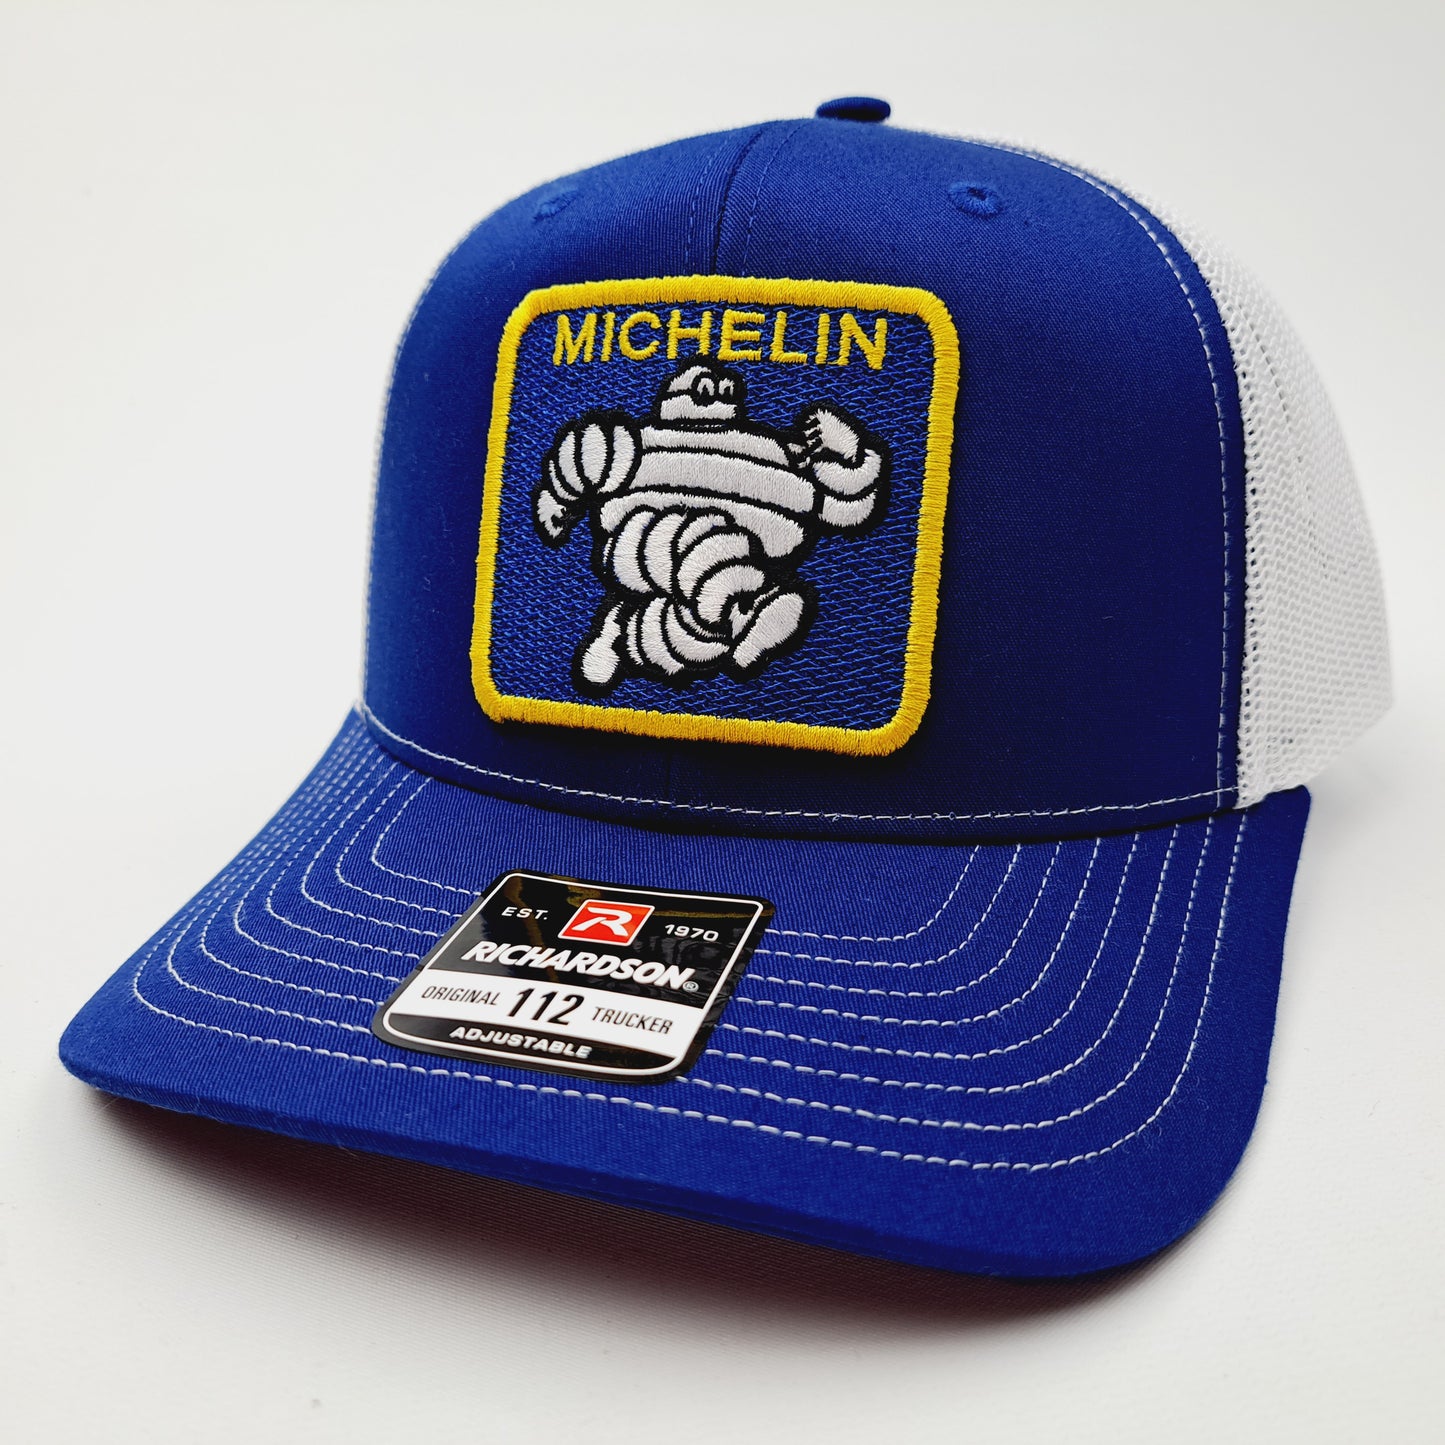 Michelin Man Embroidered Vintage Patch Richardson 112 Trucker Mesh Snapback Cap Hat Blue